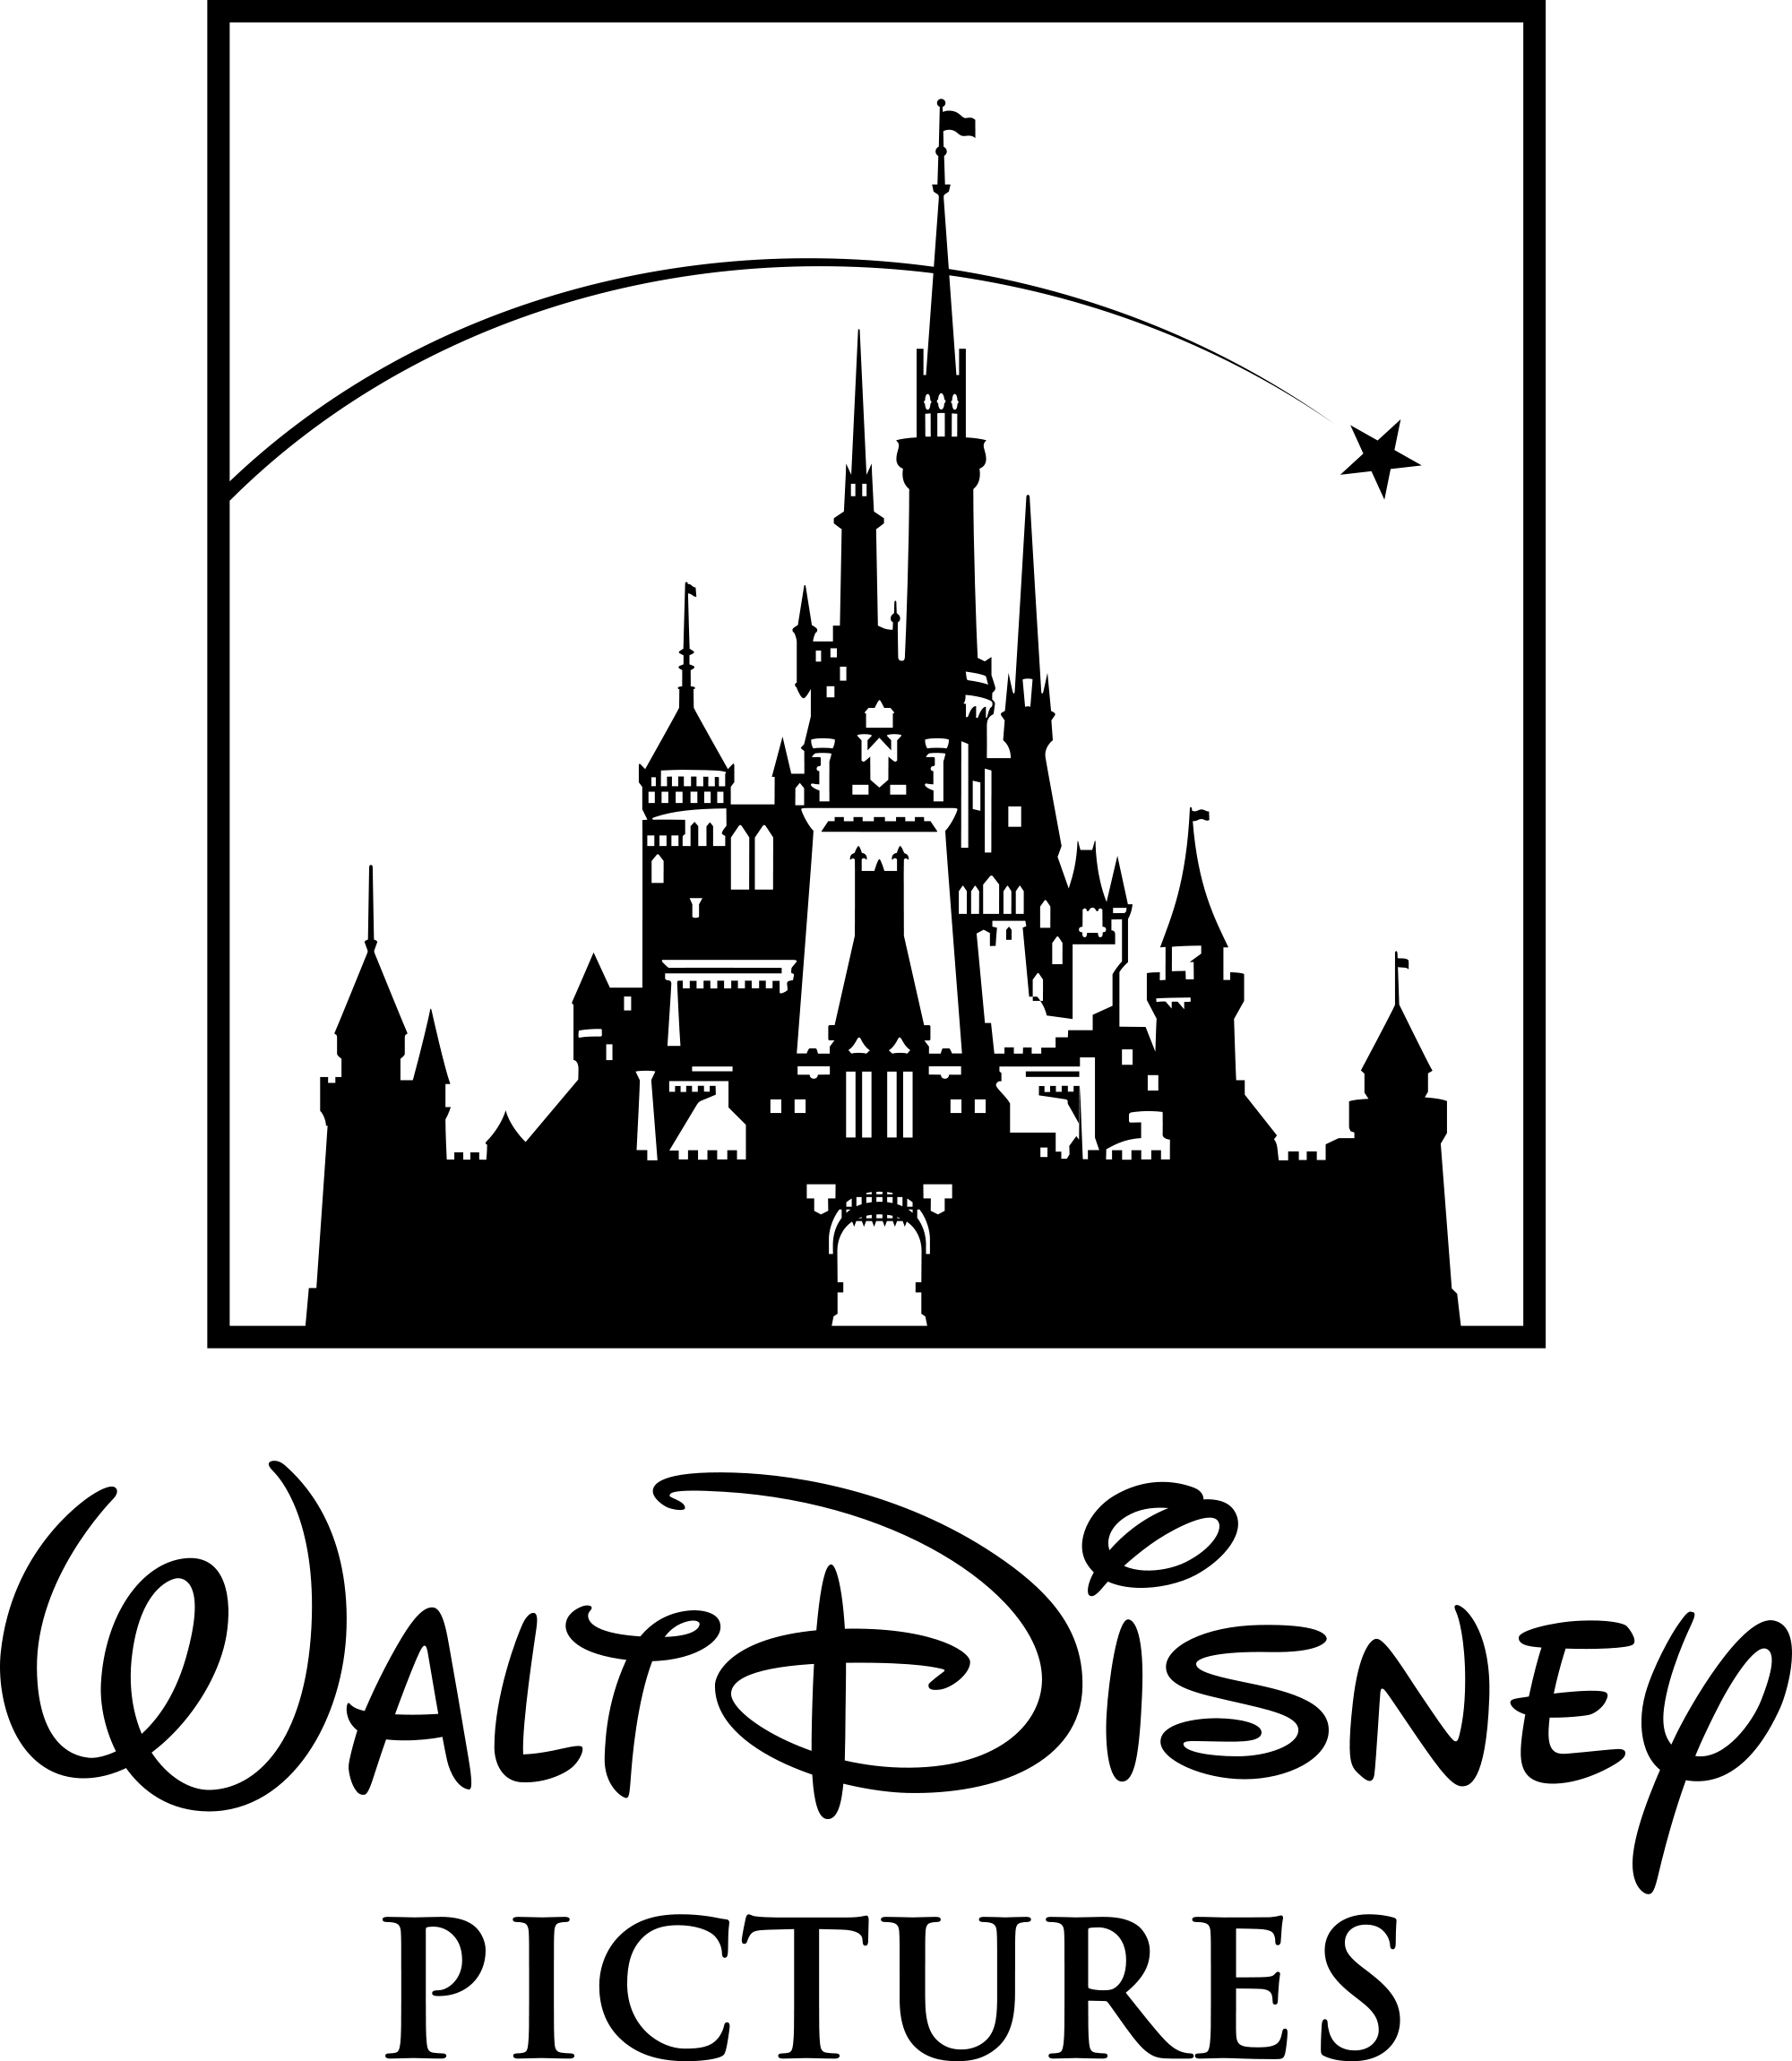 Old Walt Disney Logo - The walt disney's movie castle history | Disney movies Wiki | FANDOM ...